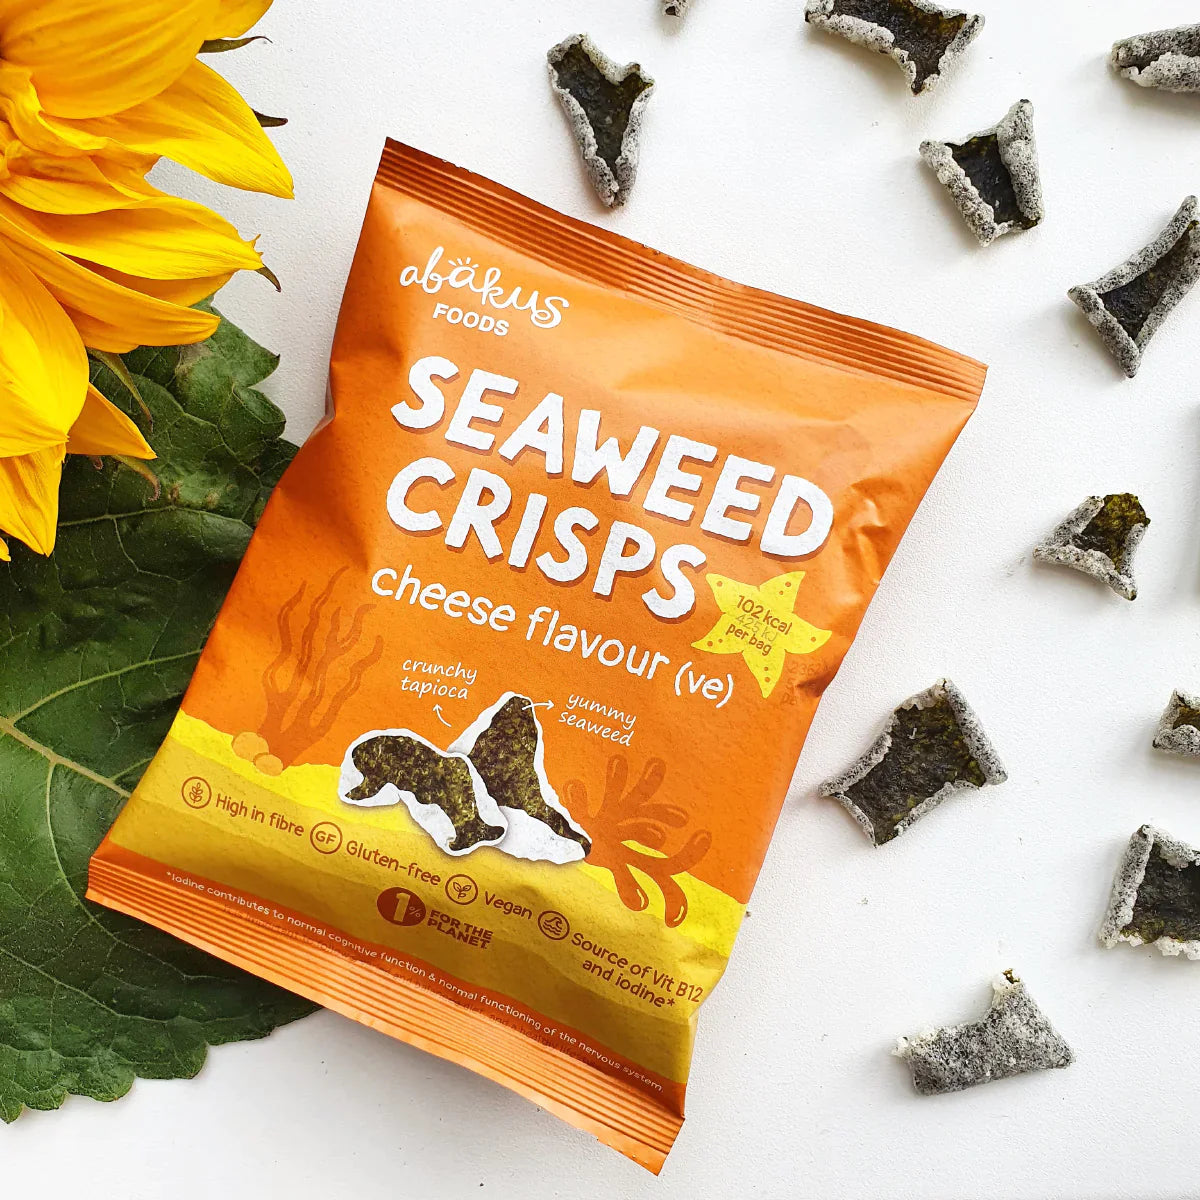 POS - Abakus Seaweed Crisps - Cheese Flavour (18g)